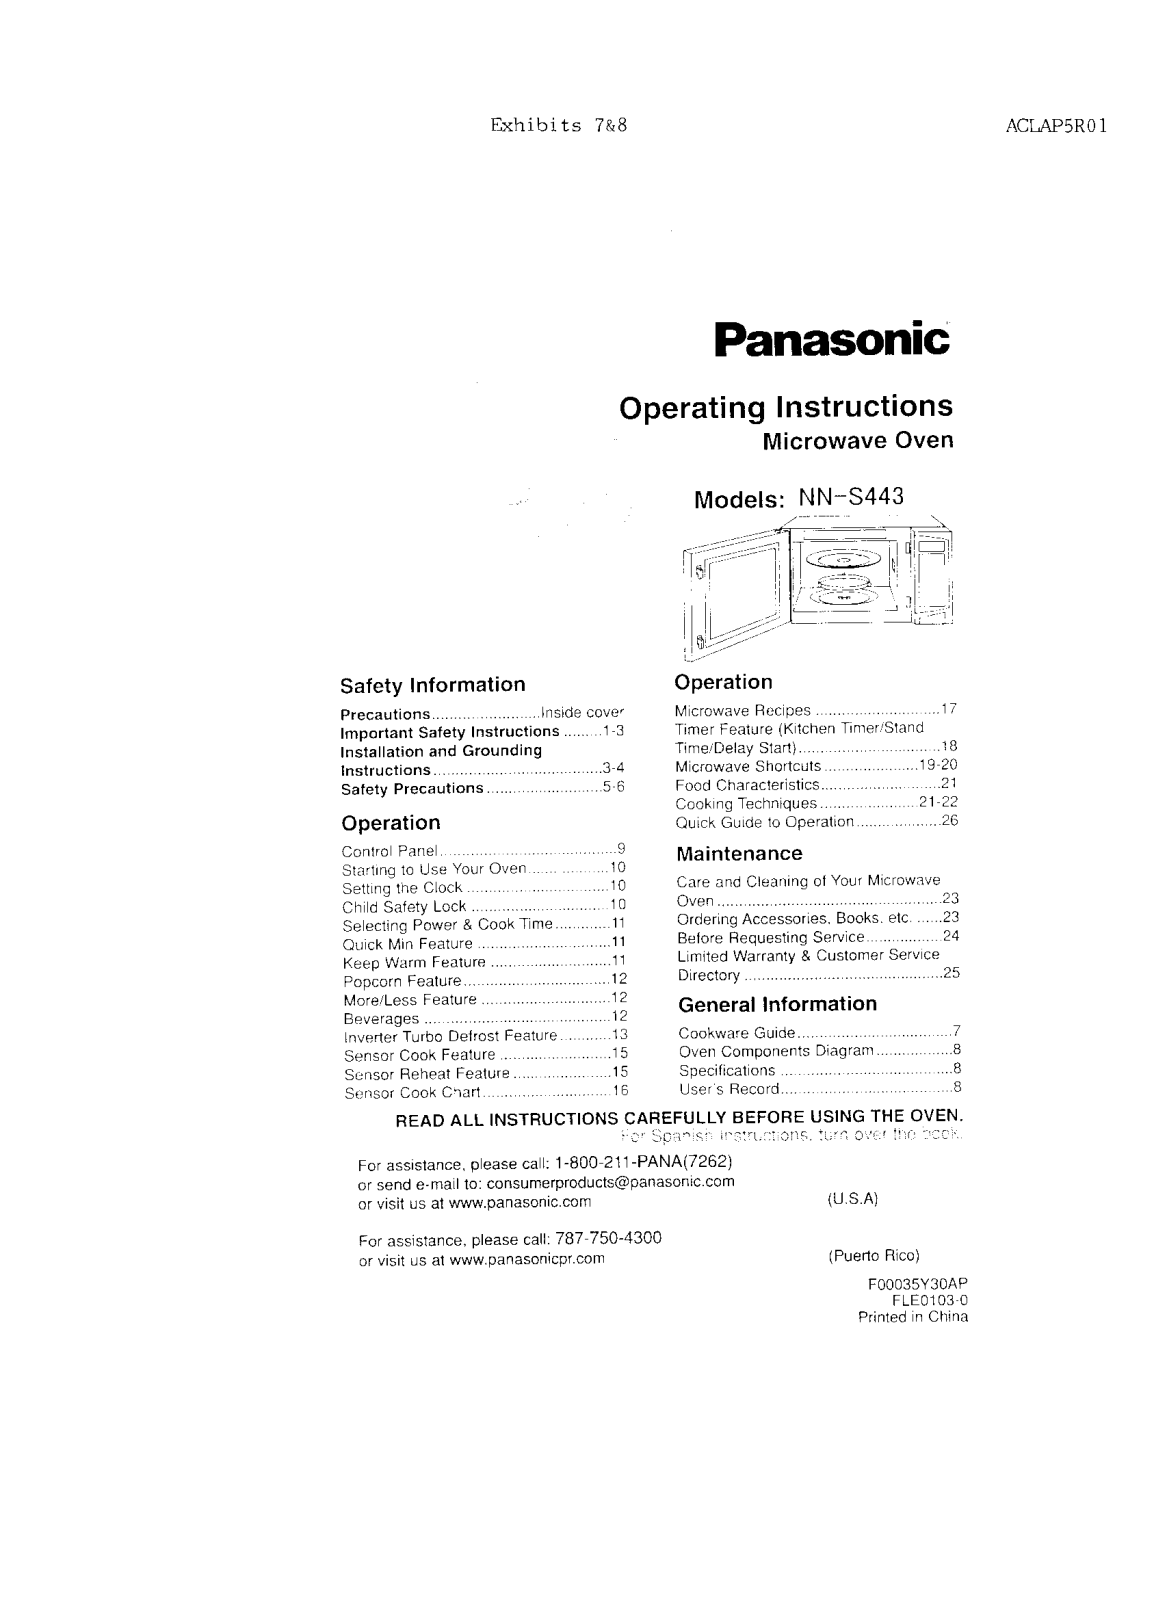 Panasonic AP5R01 Users Manual